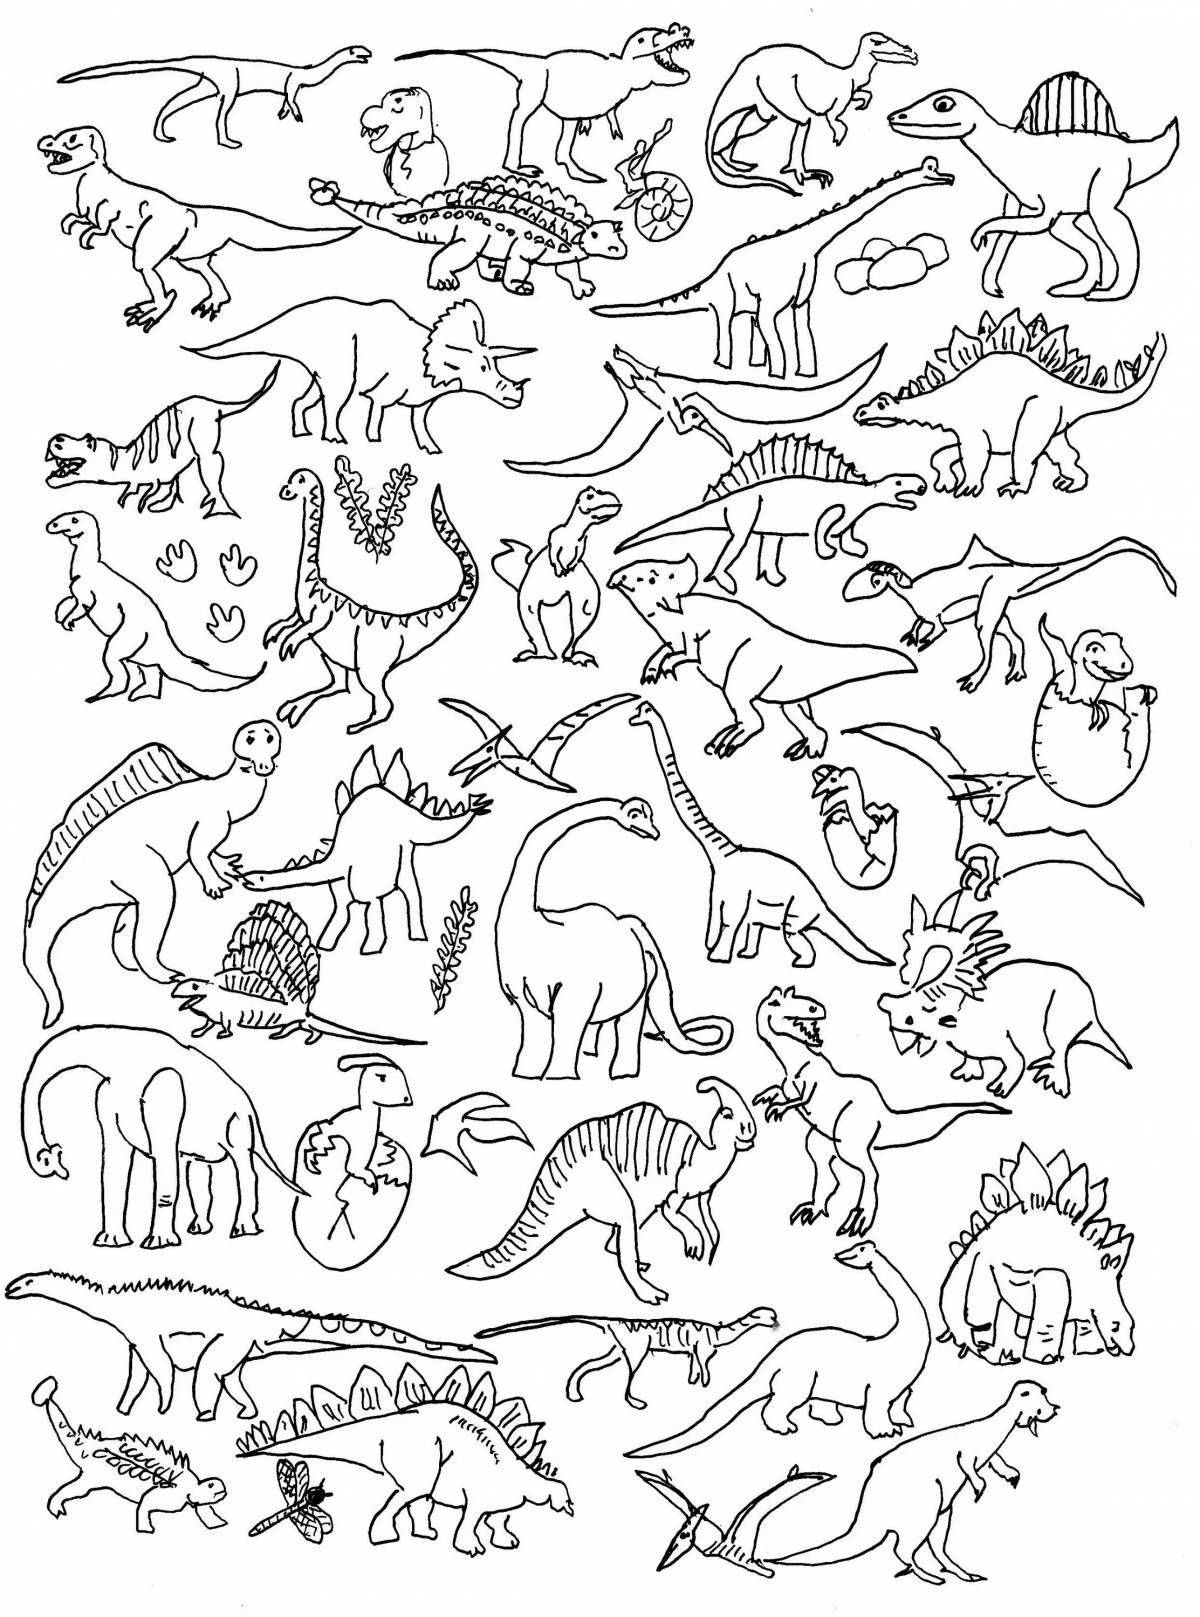 Dinosaurs lot #10